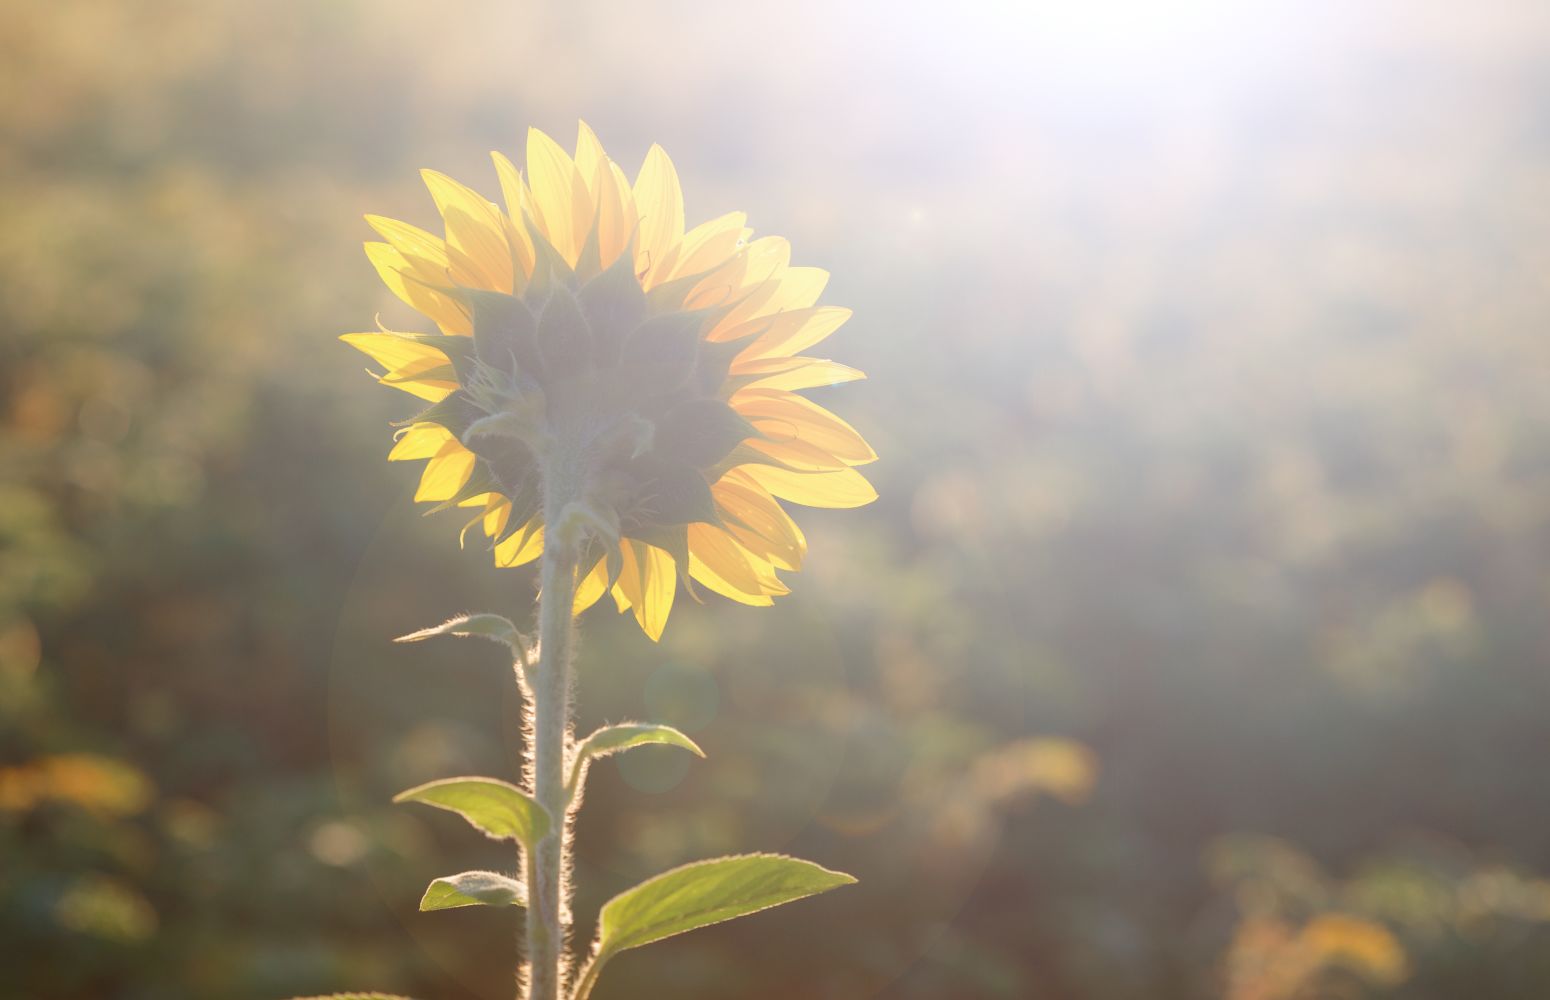 sunflower head turned toward the sun in the morning